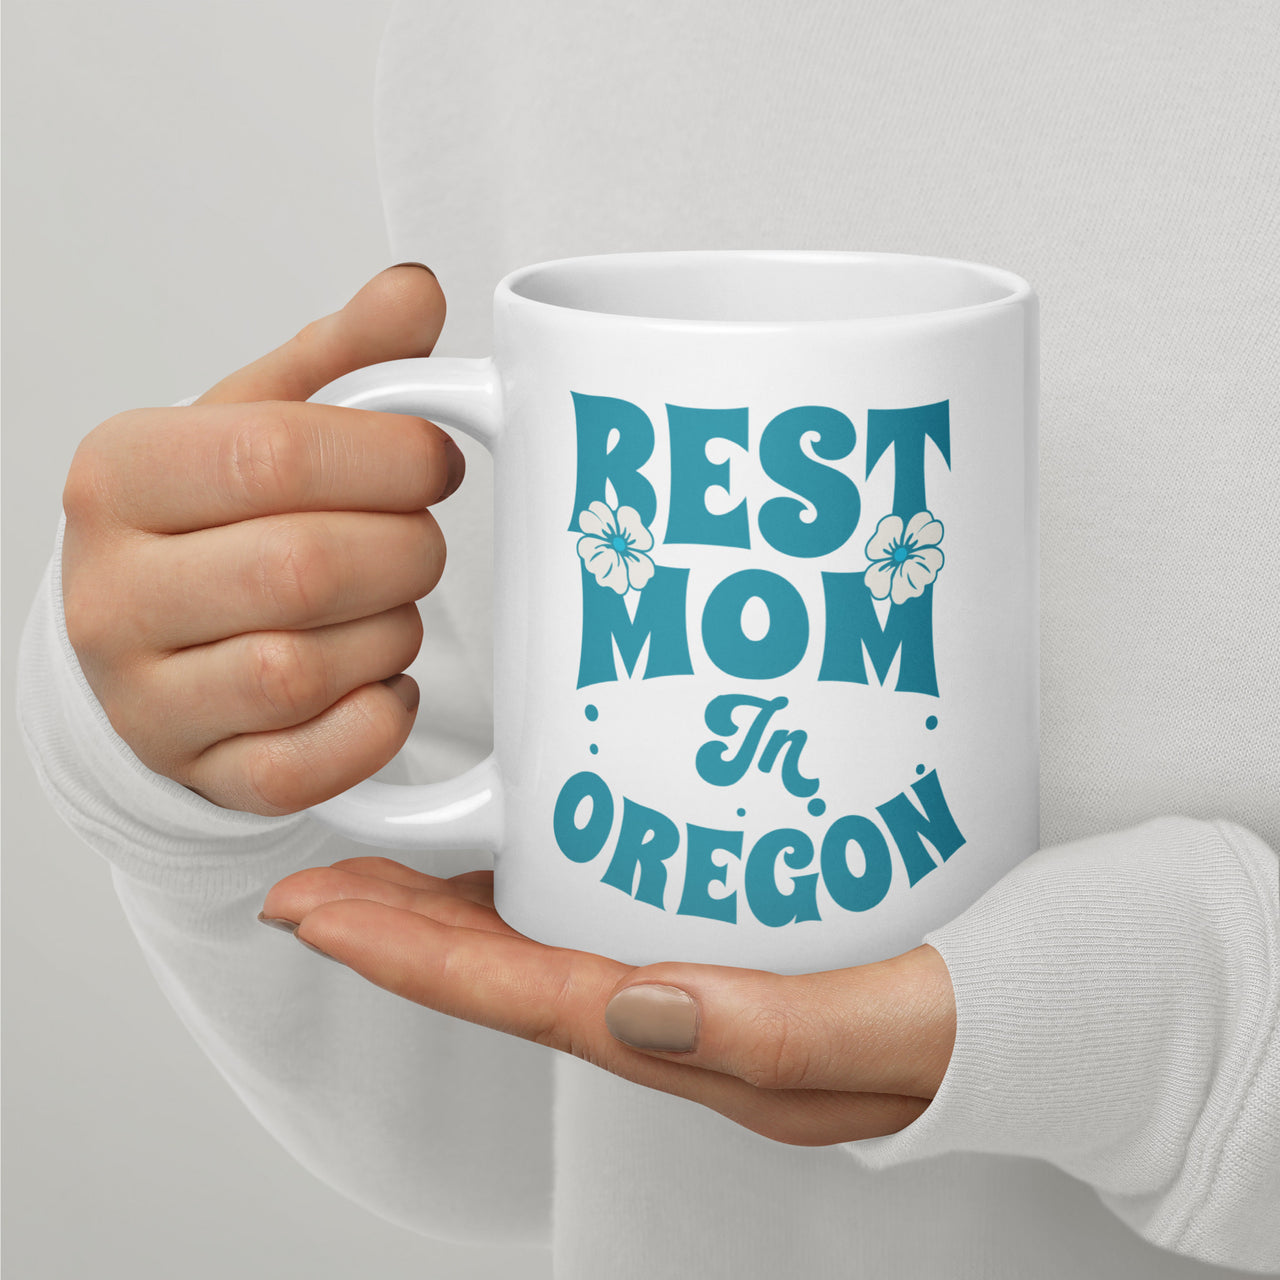 Best Mom in Oregon - White glossy mug